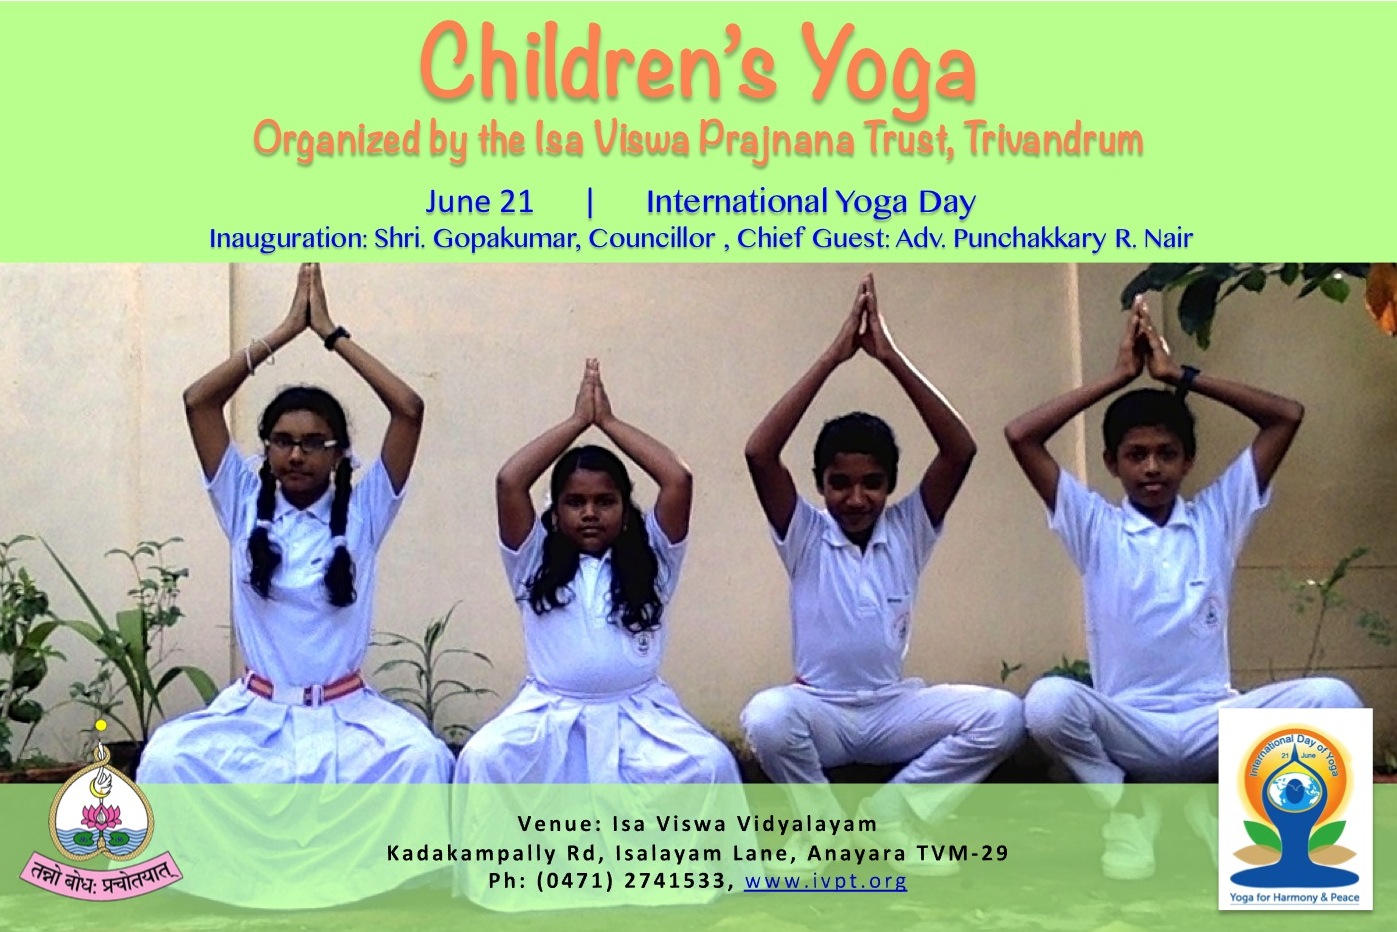 Children's Yoga Day